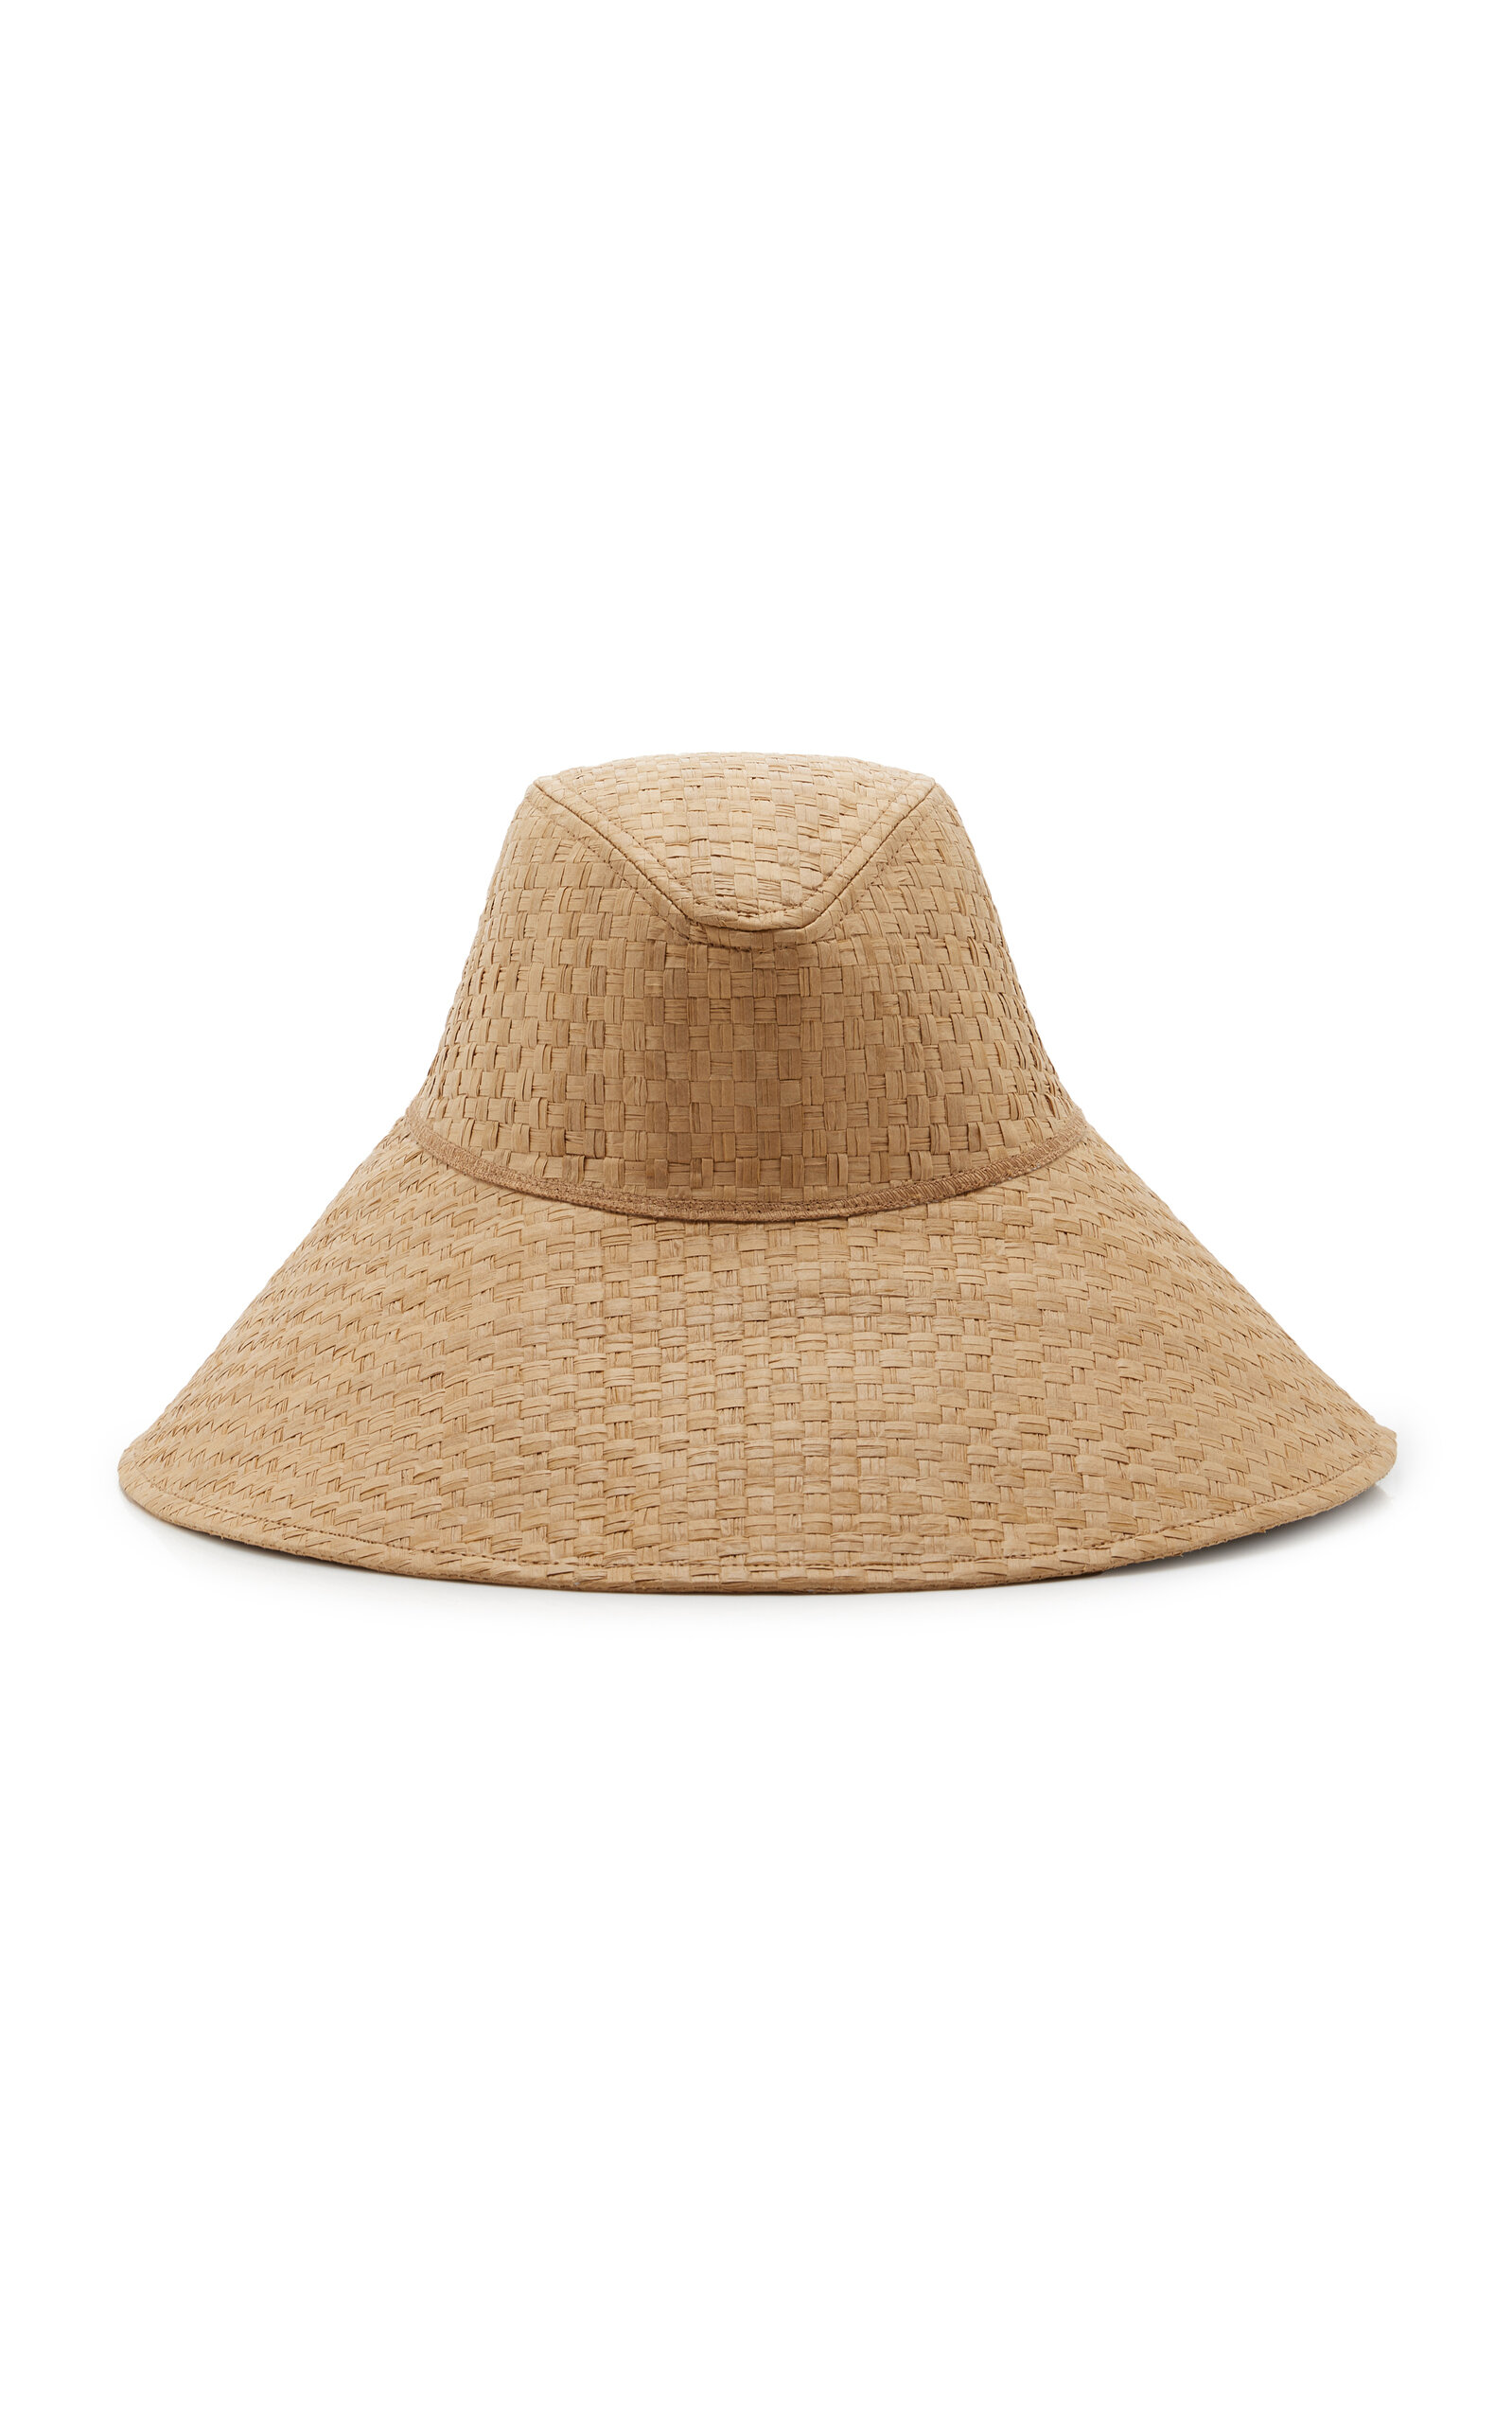 The Cove Raffia Hat